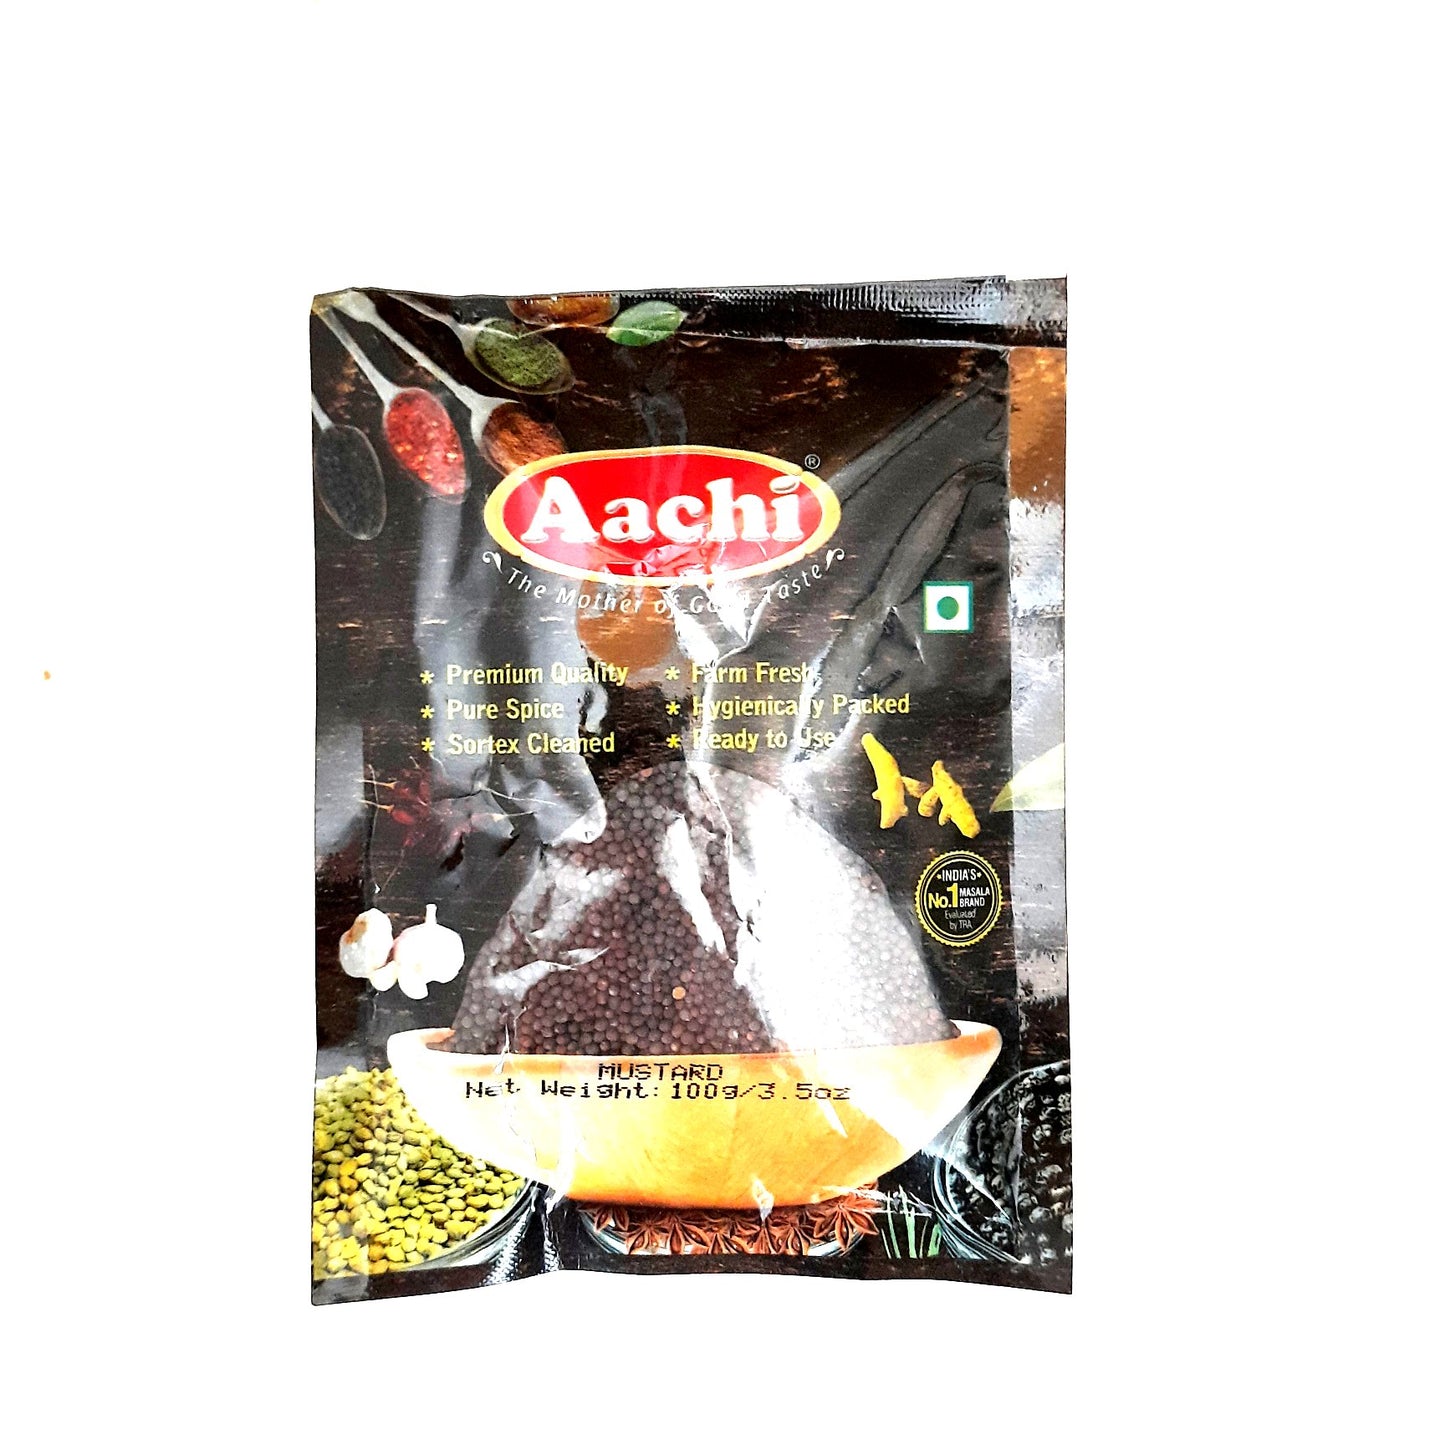 Aachi Black Mustard seeds 500g